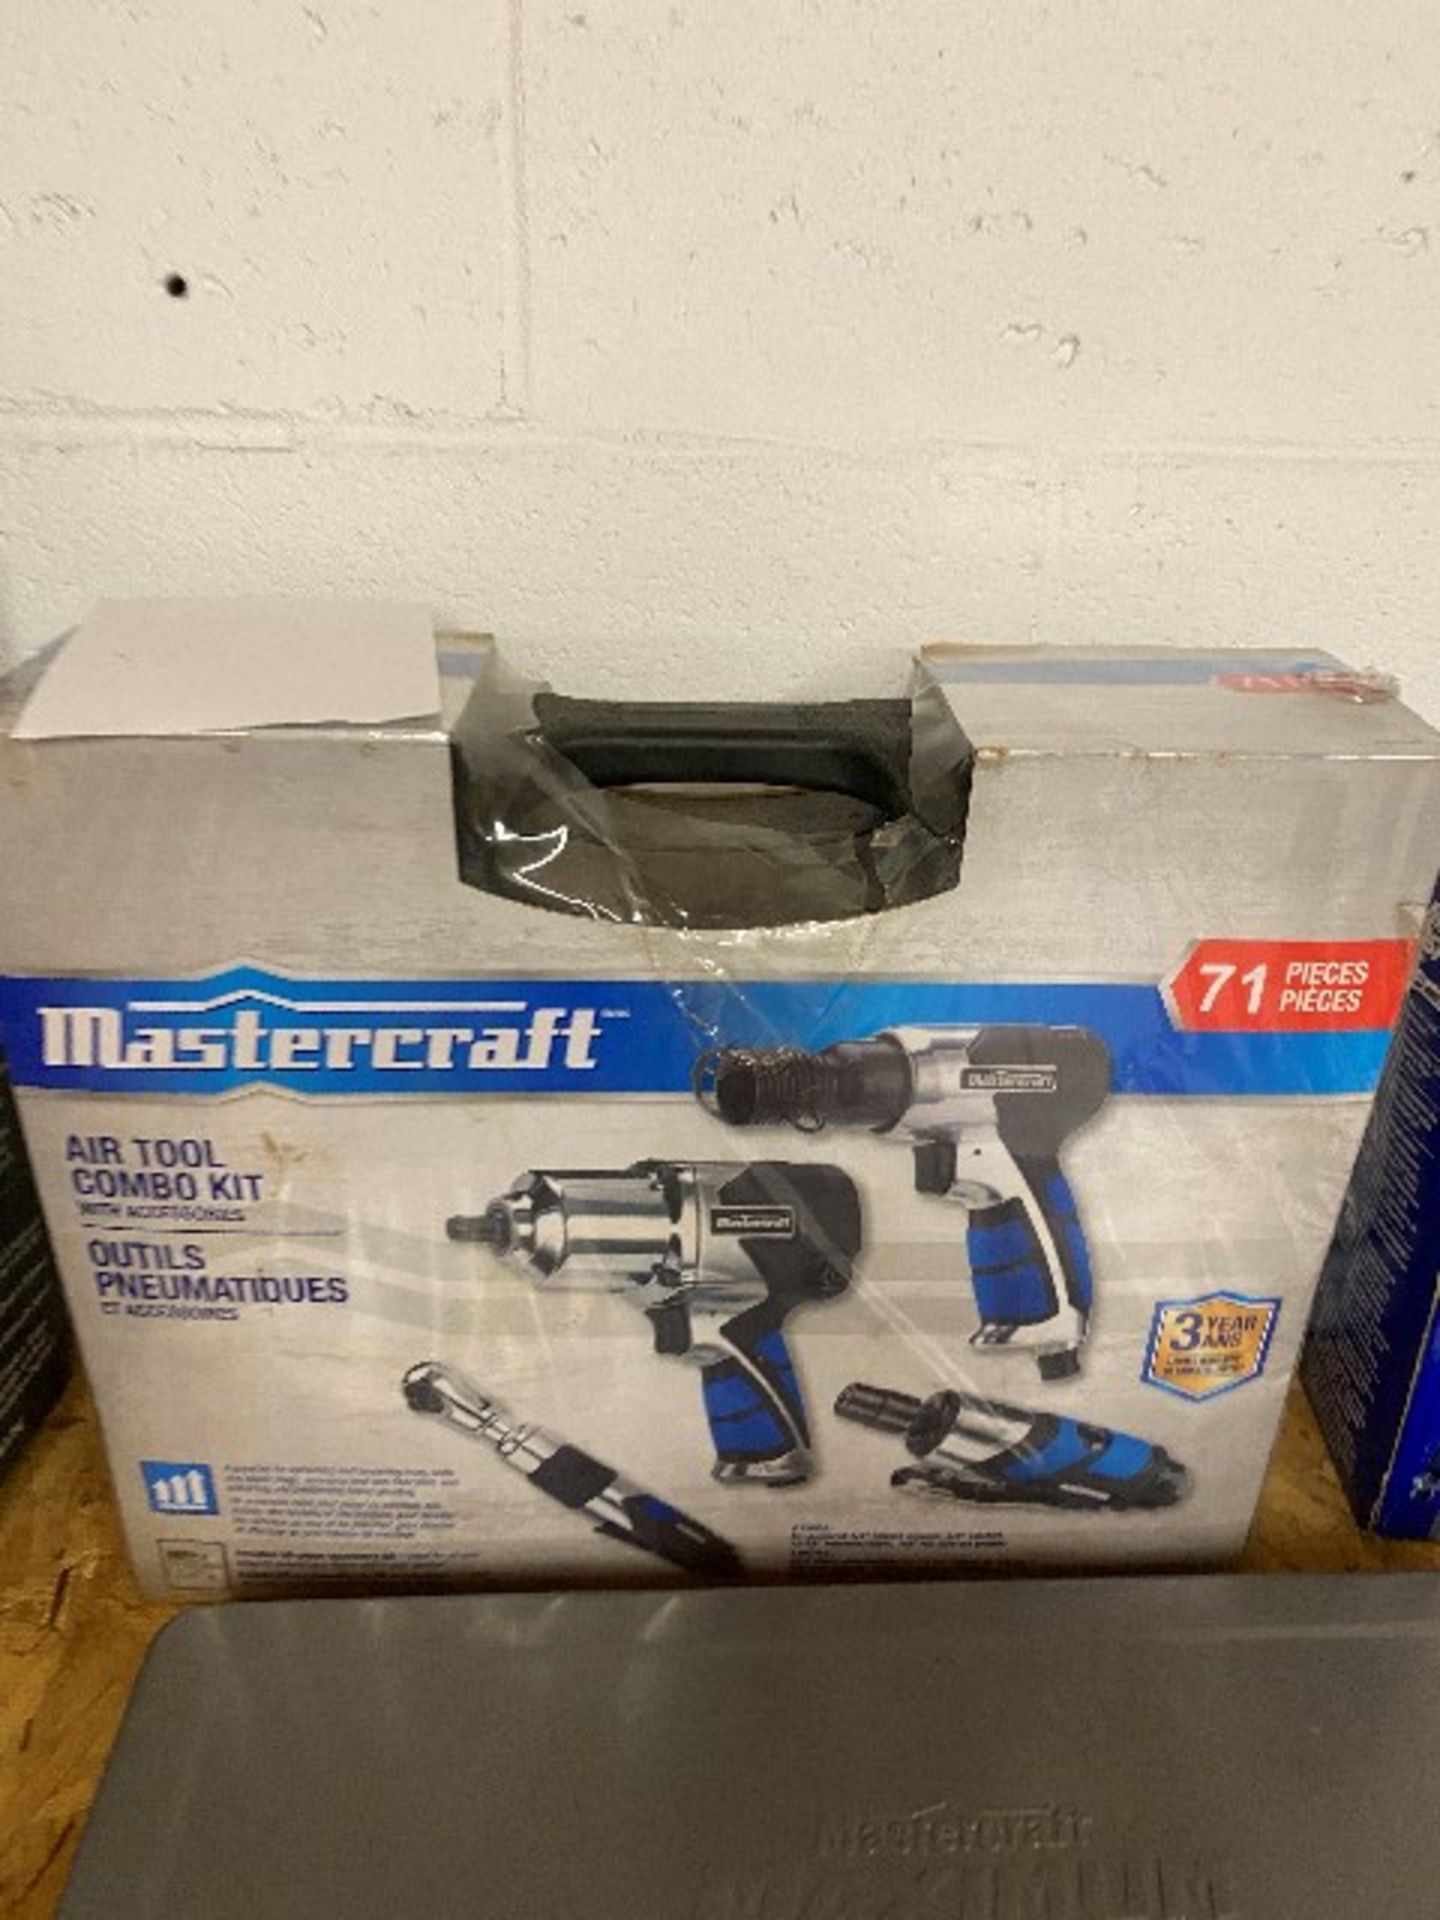 Mastercraft Air tool combo kit, 4 tools, wrench, ratchet, etc..., NEW